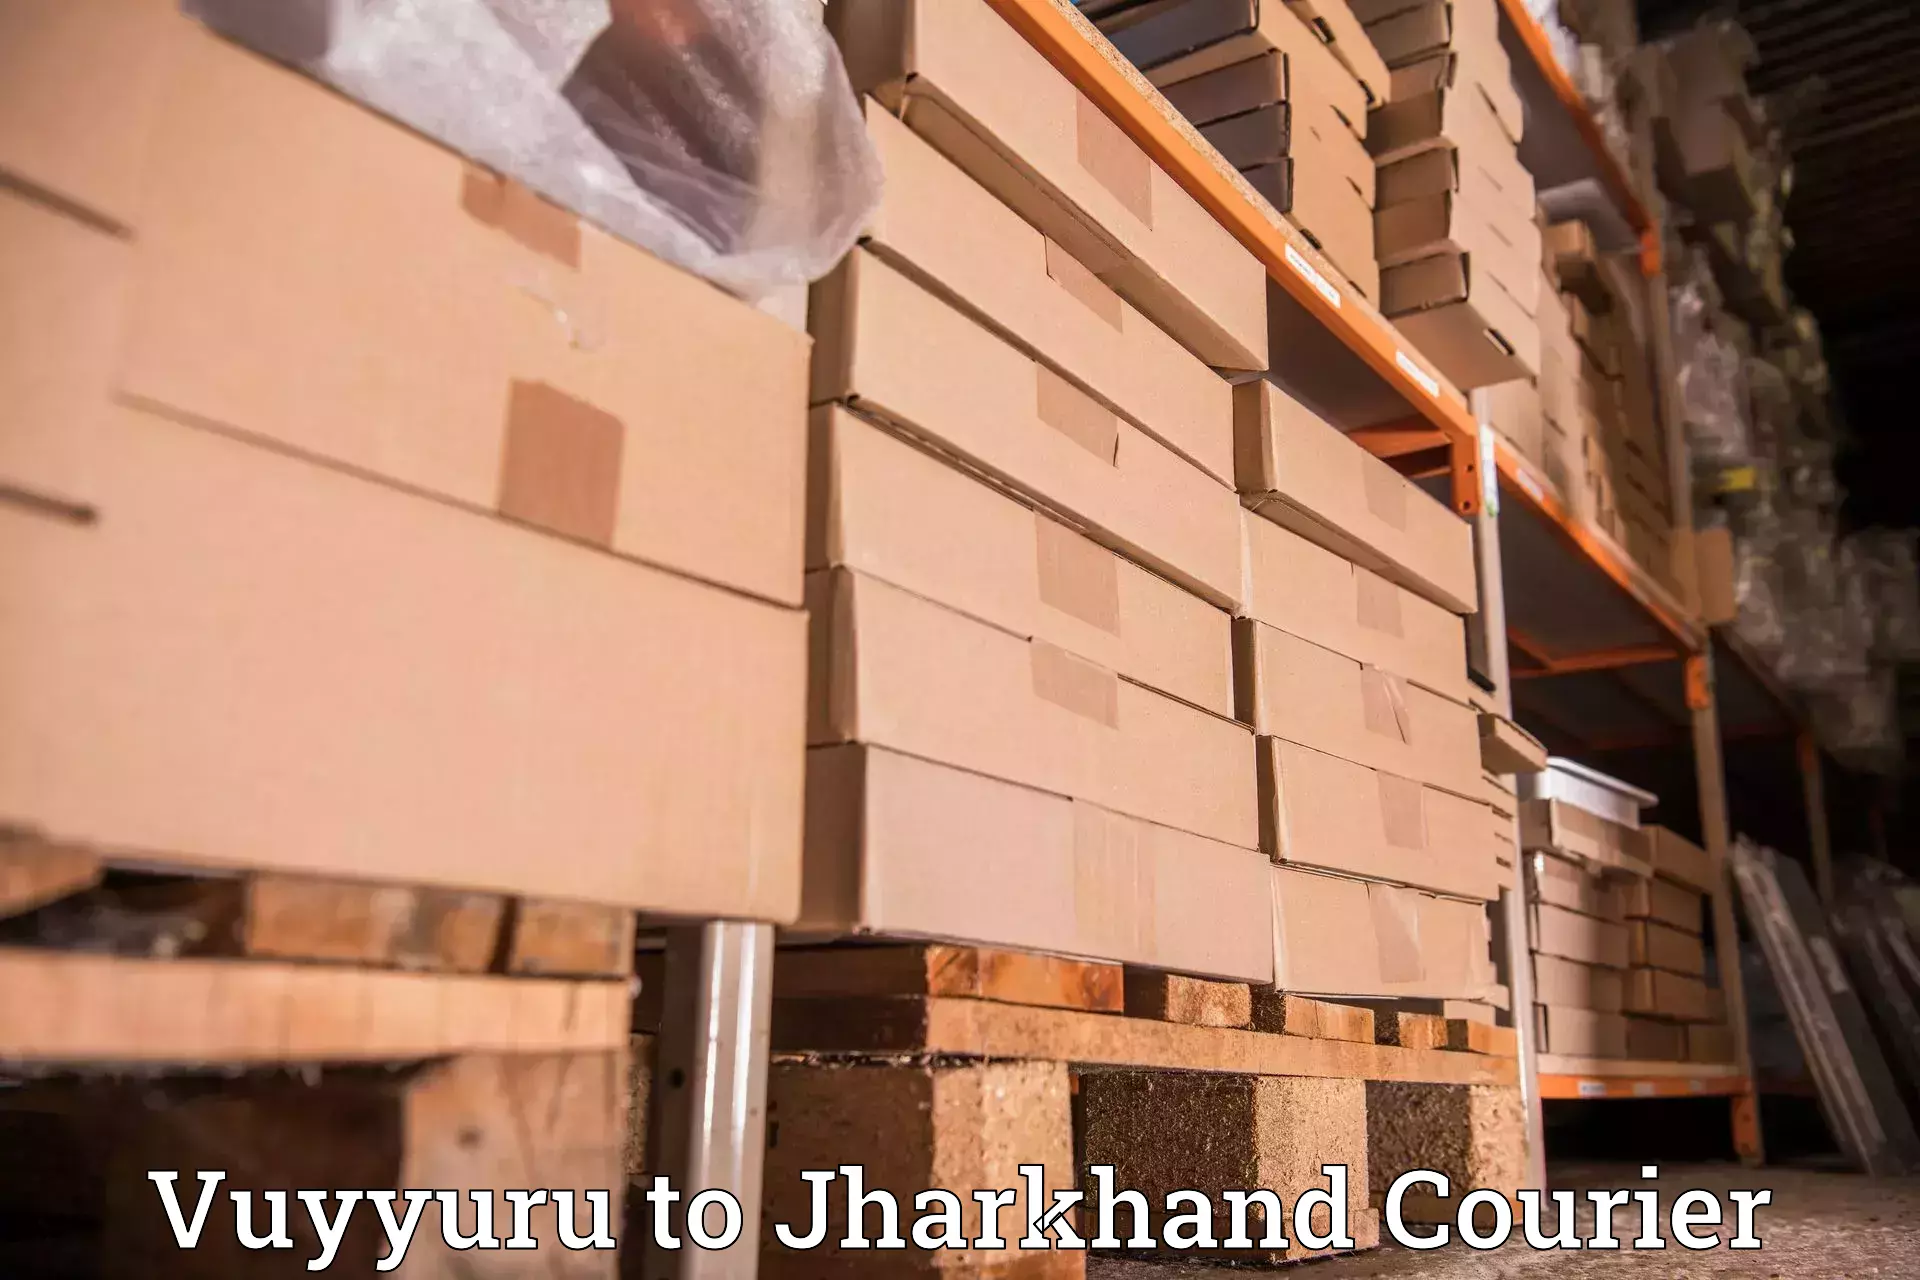 Advanced shipping network Vuyyuru to Ranchi